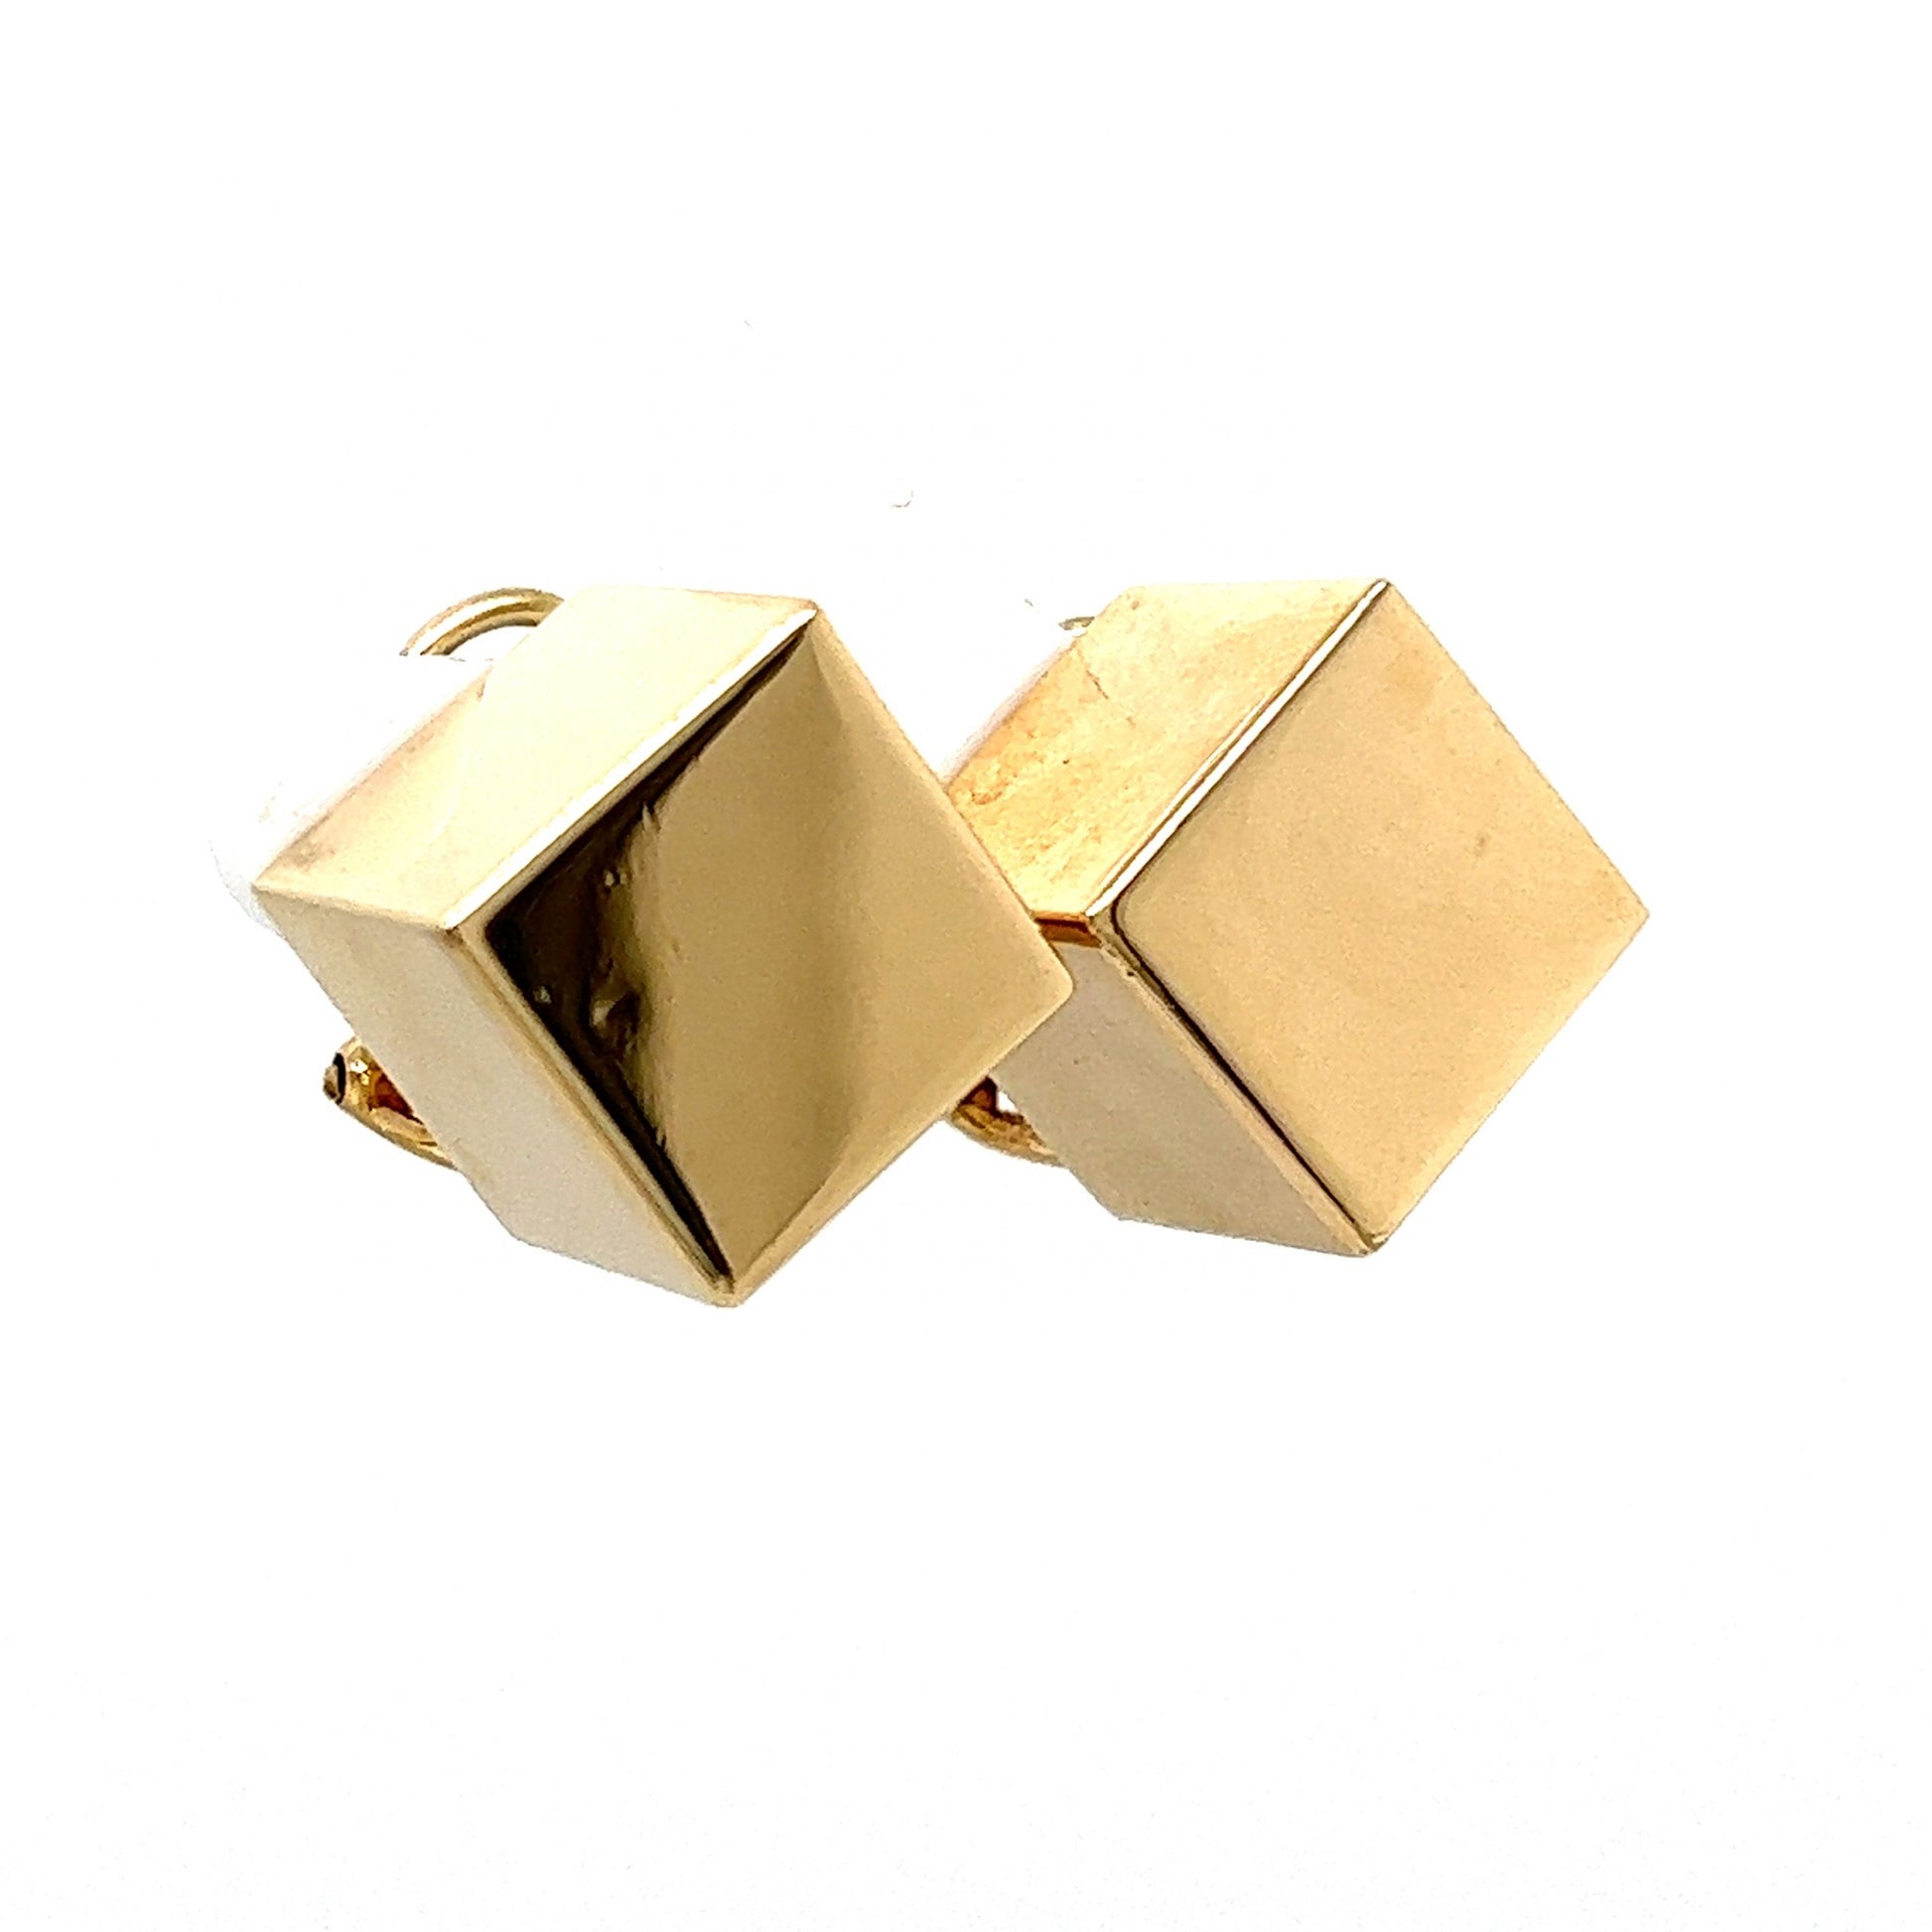 Cube Stud Earrings in 14k Yellow GoldComposition: 14 Karat Yellow Gold Total Gram Weight: 9.2 g Inscription: 14k
      